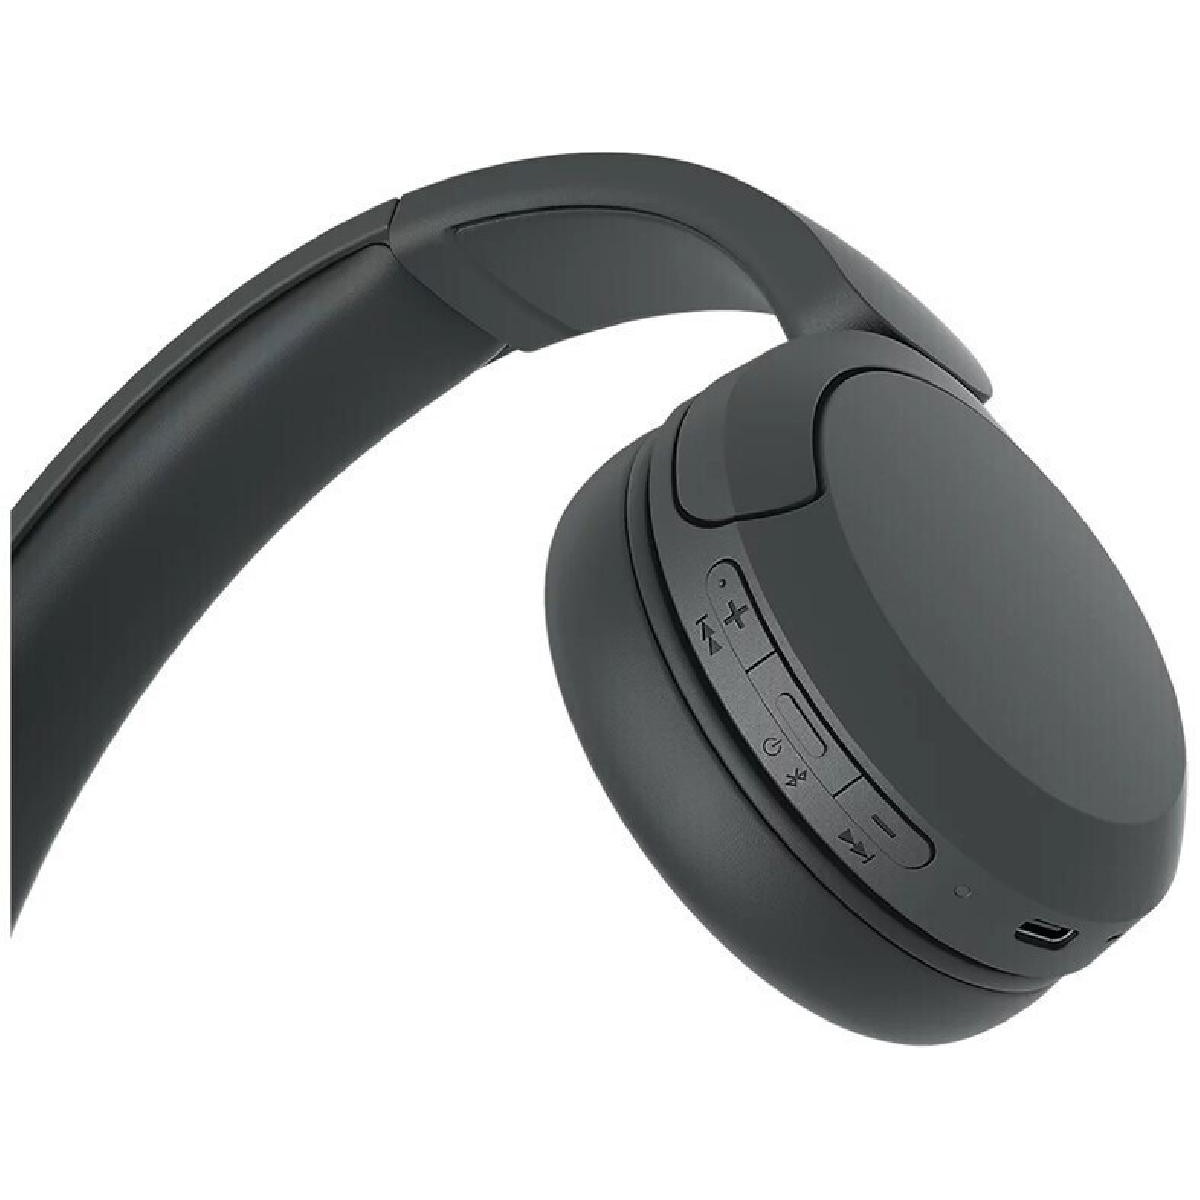 Sony WH-CH520B On-Ear bluetooth headphones black